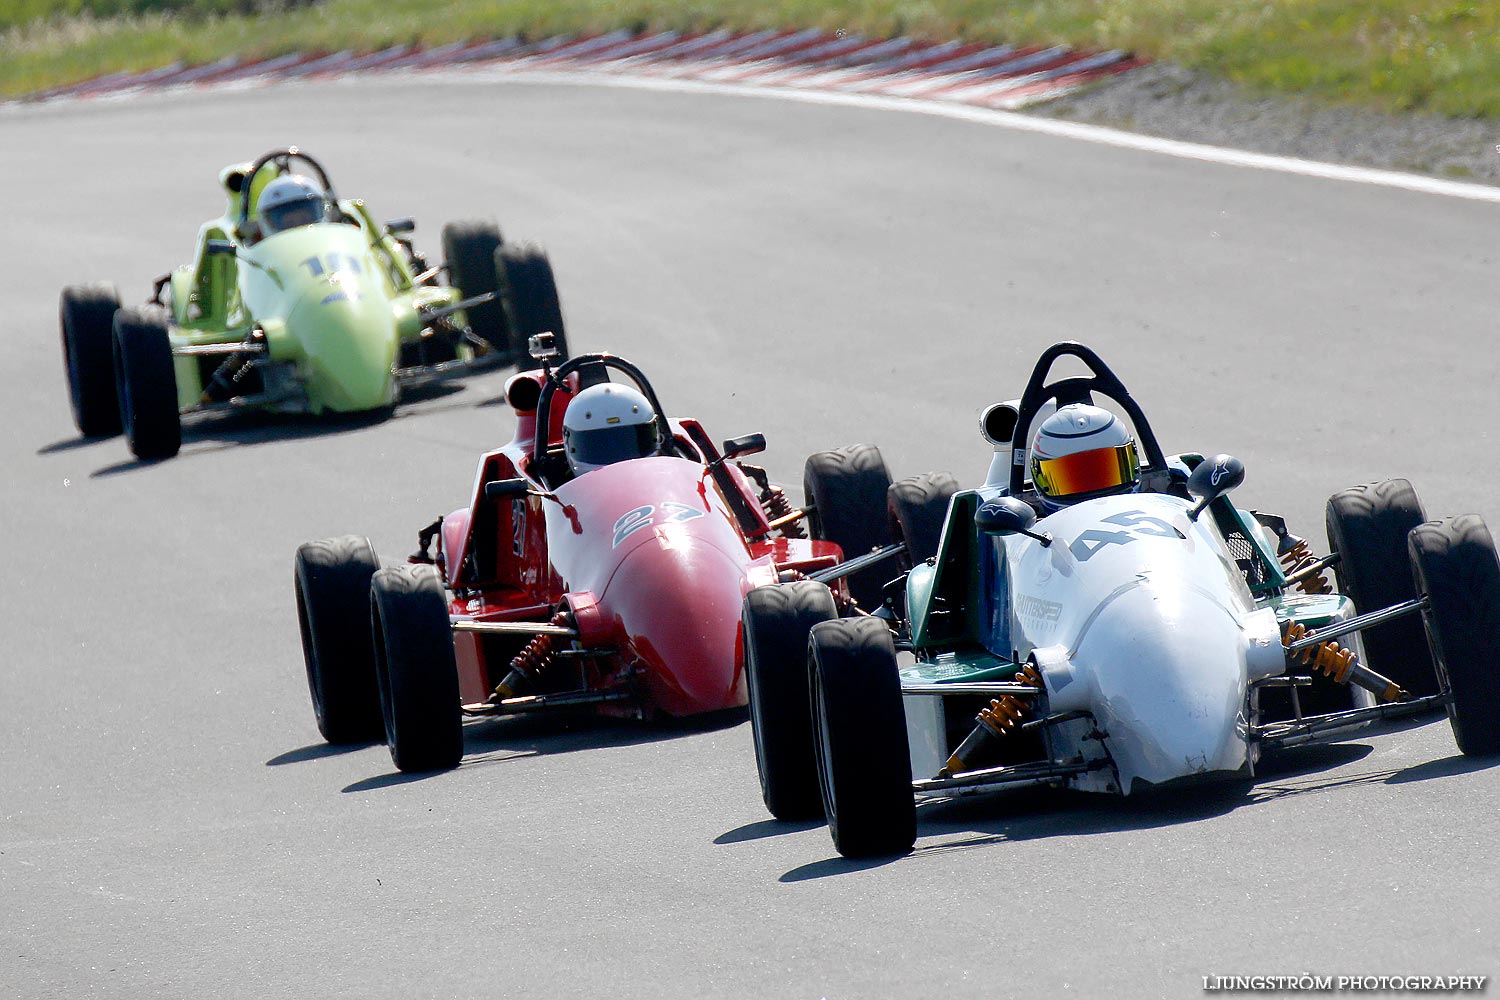 SSK Raceweek,mix,Kinnekulle Ring,Götene,Sverige,Motorsport,,2014,90288